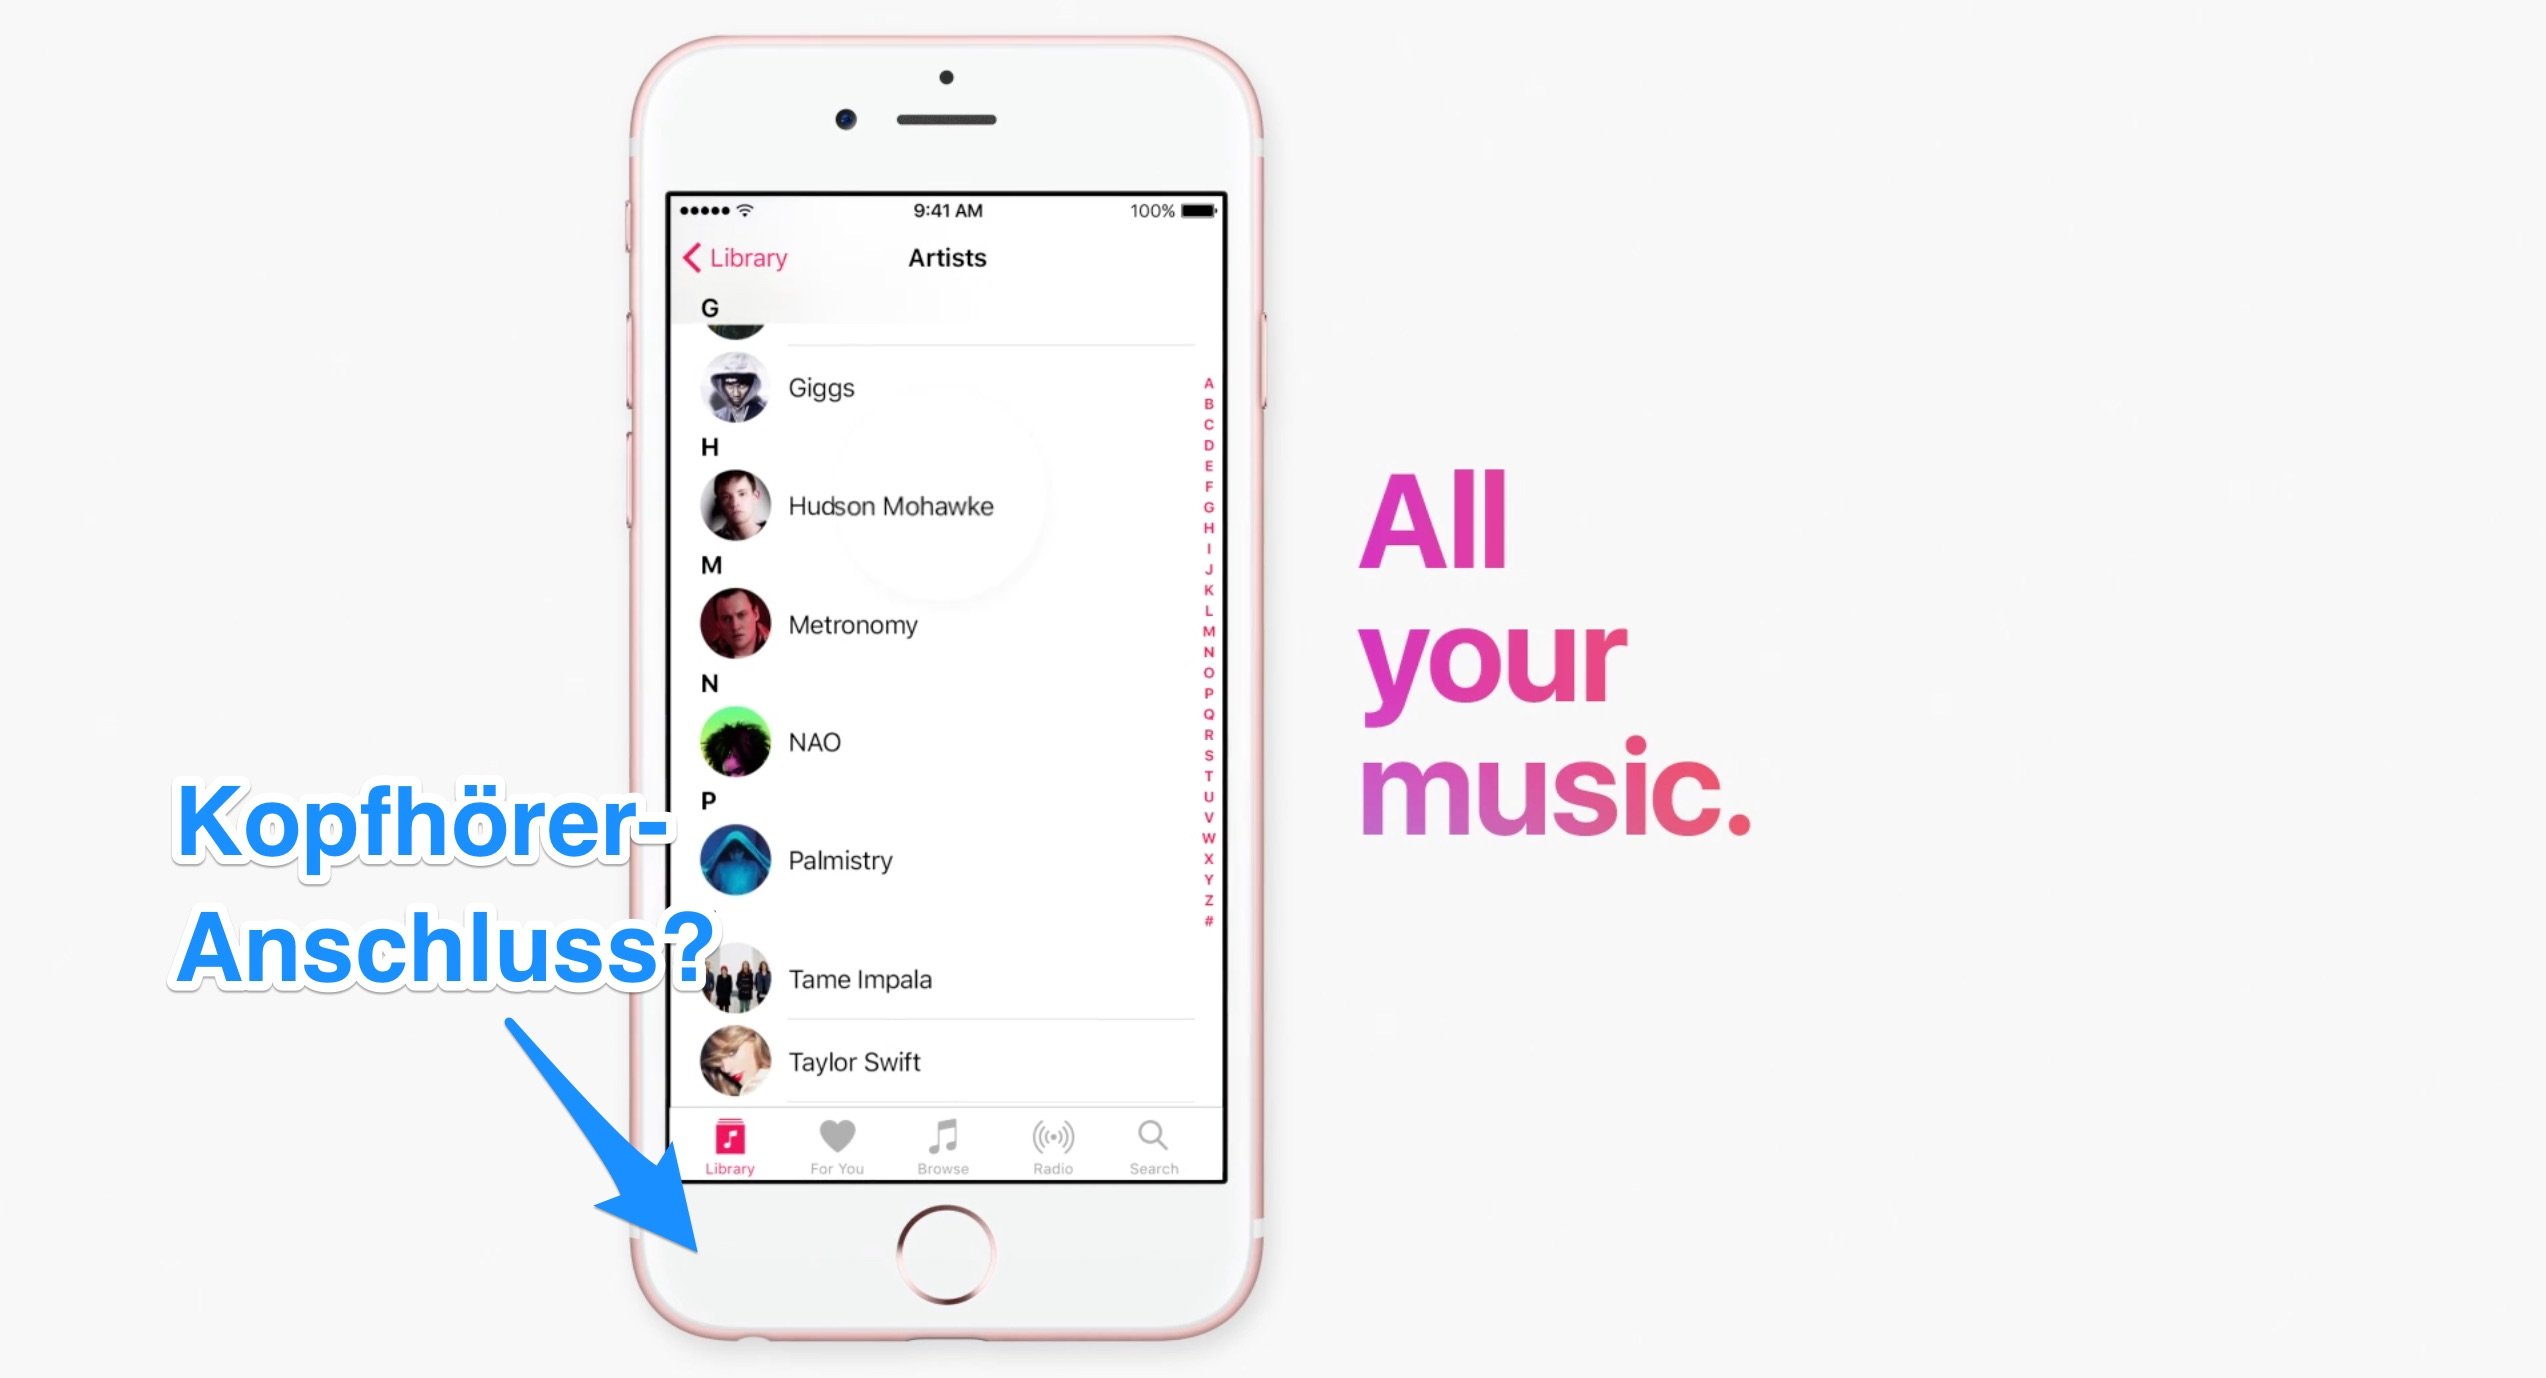 Neuer Apple Music Werbeclip featured iPhone 6s statt iPhone 7? 2